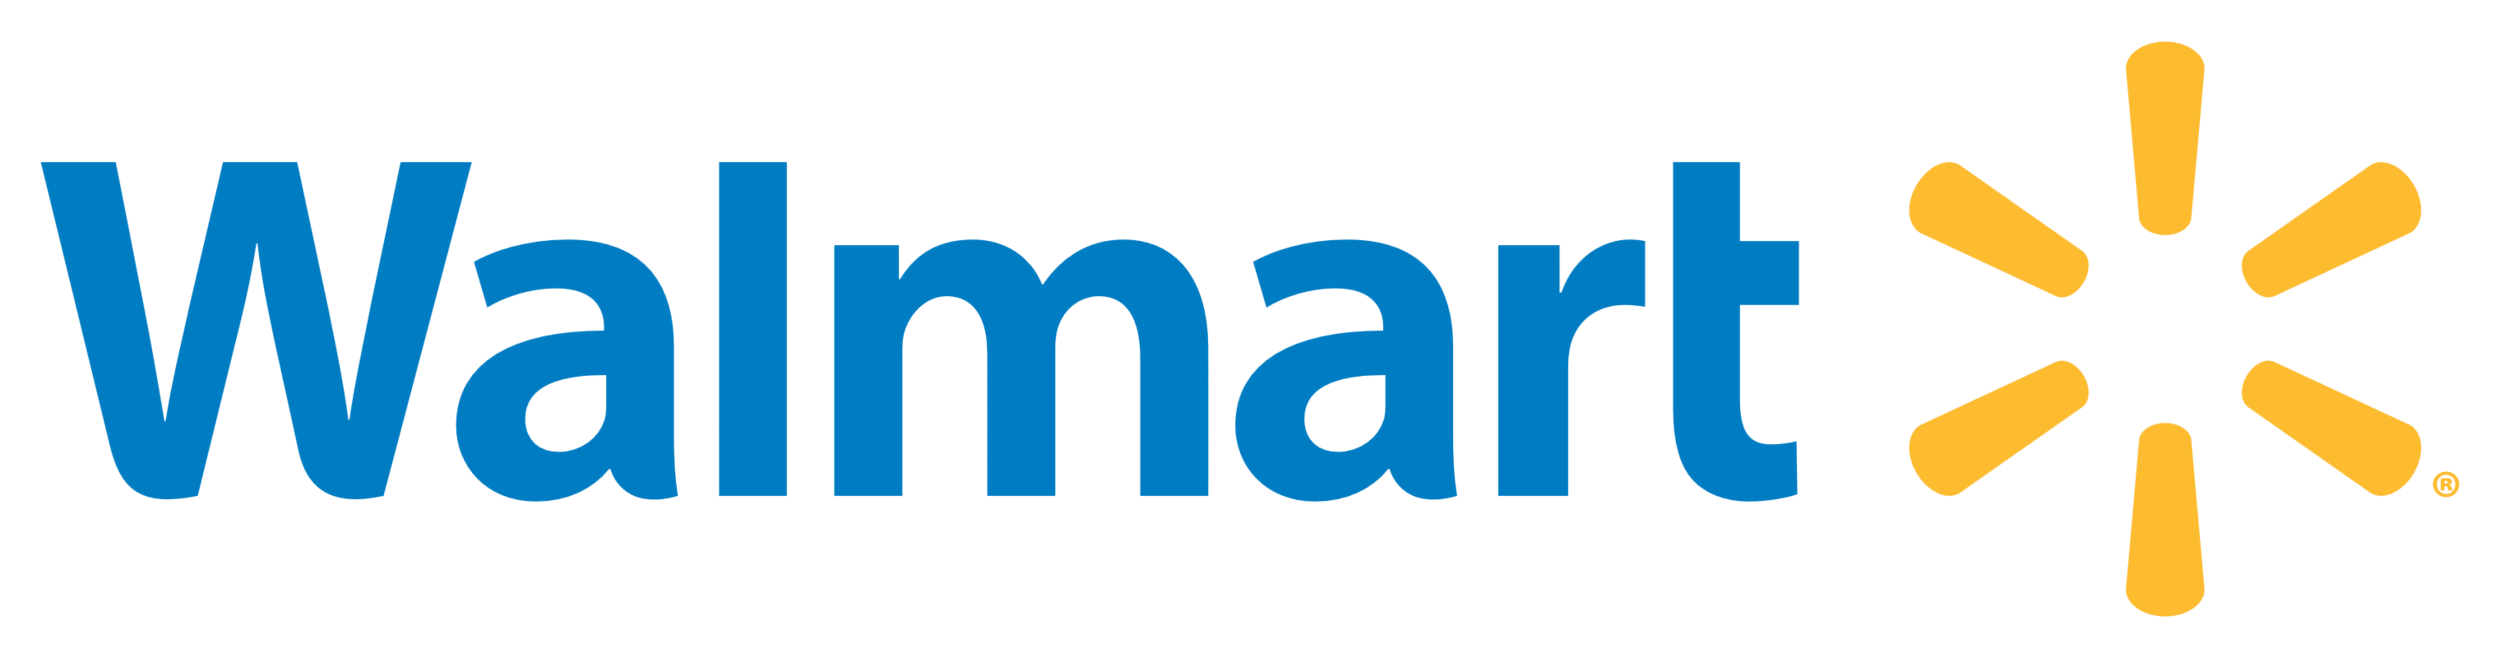 Walmart_logo_transparent_png (1).png